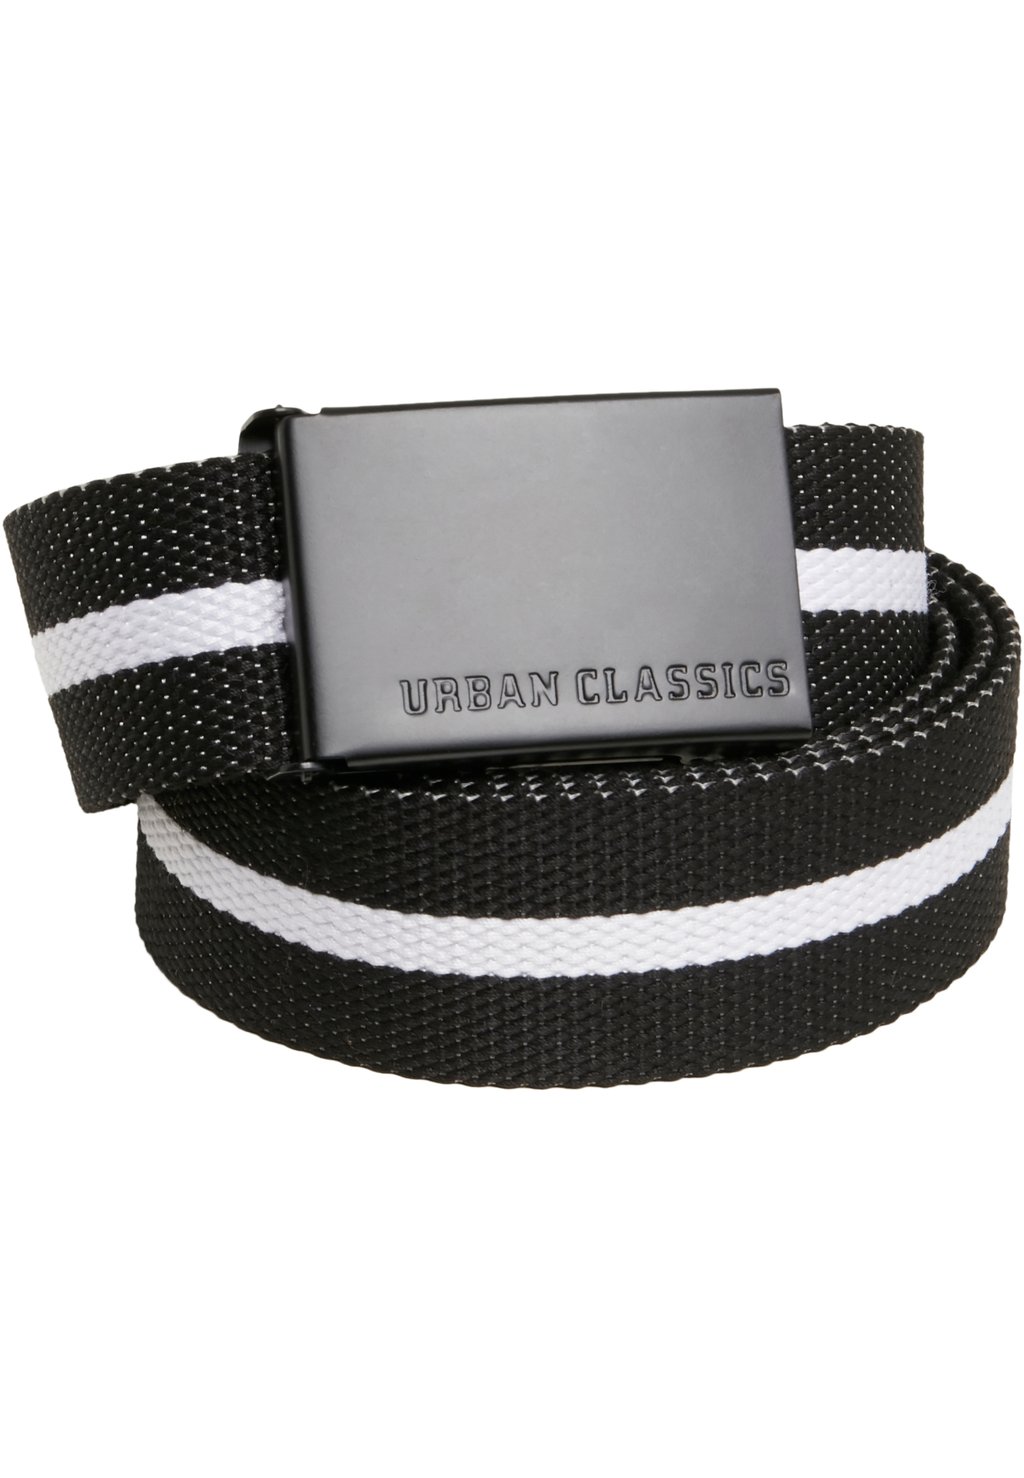 Ремень SINGLE Urban Classics, цвет black/white stripe black футболка ymc day stripe цвет black white